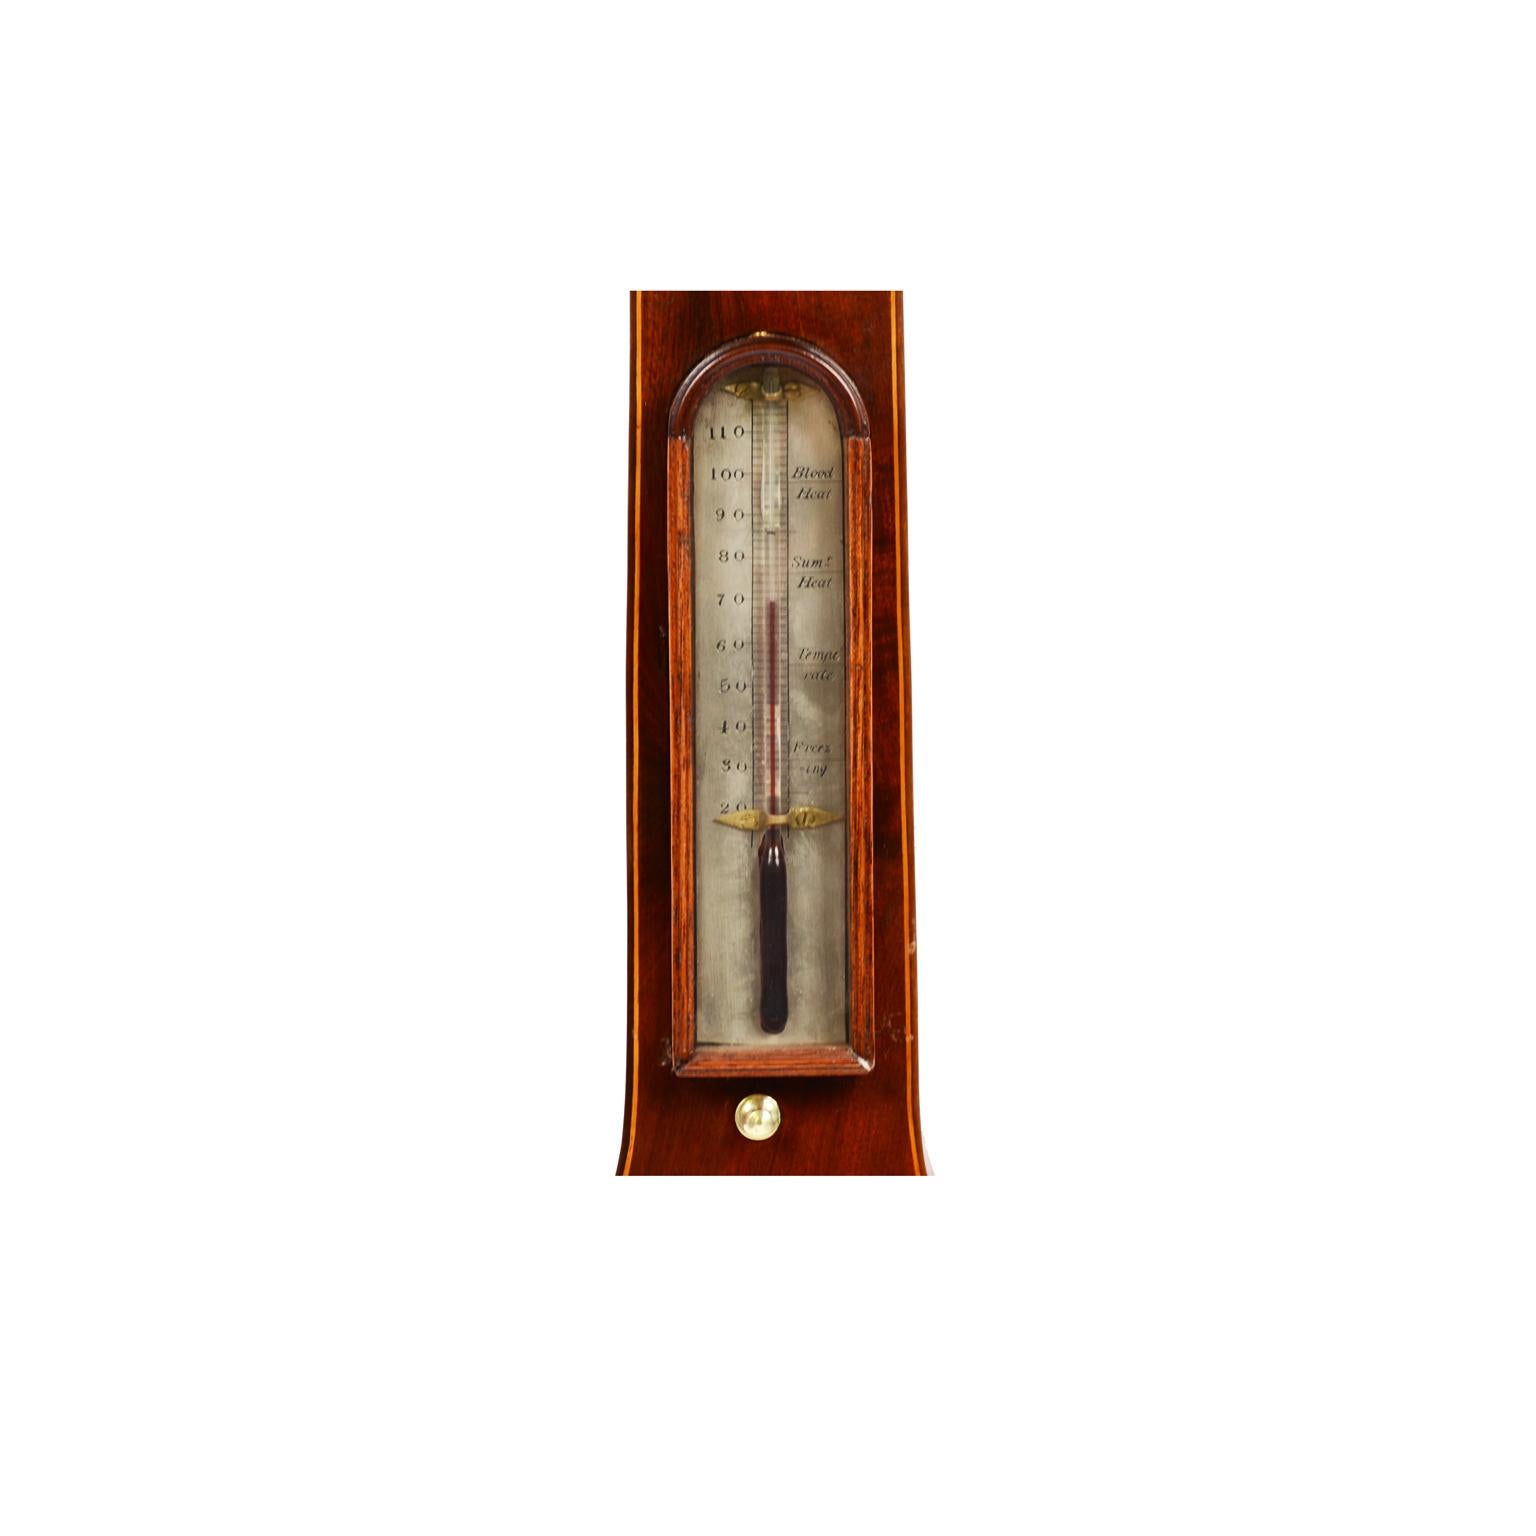 1850 Ciceri and Pini Mahogany Barometer Antique Weather Measuring Instrument  5